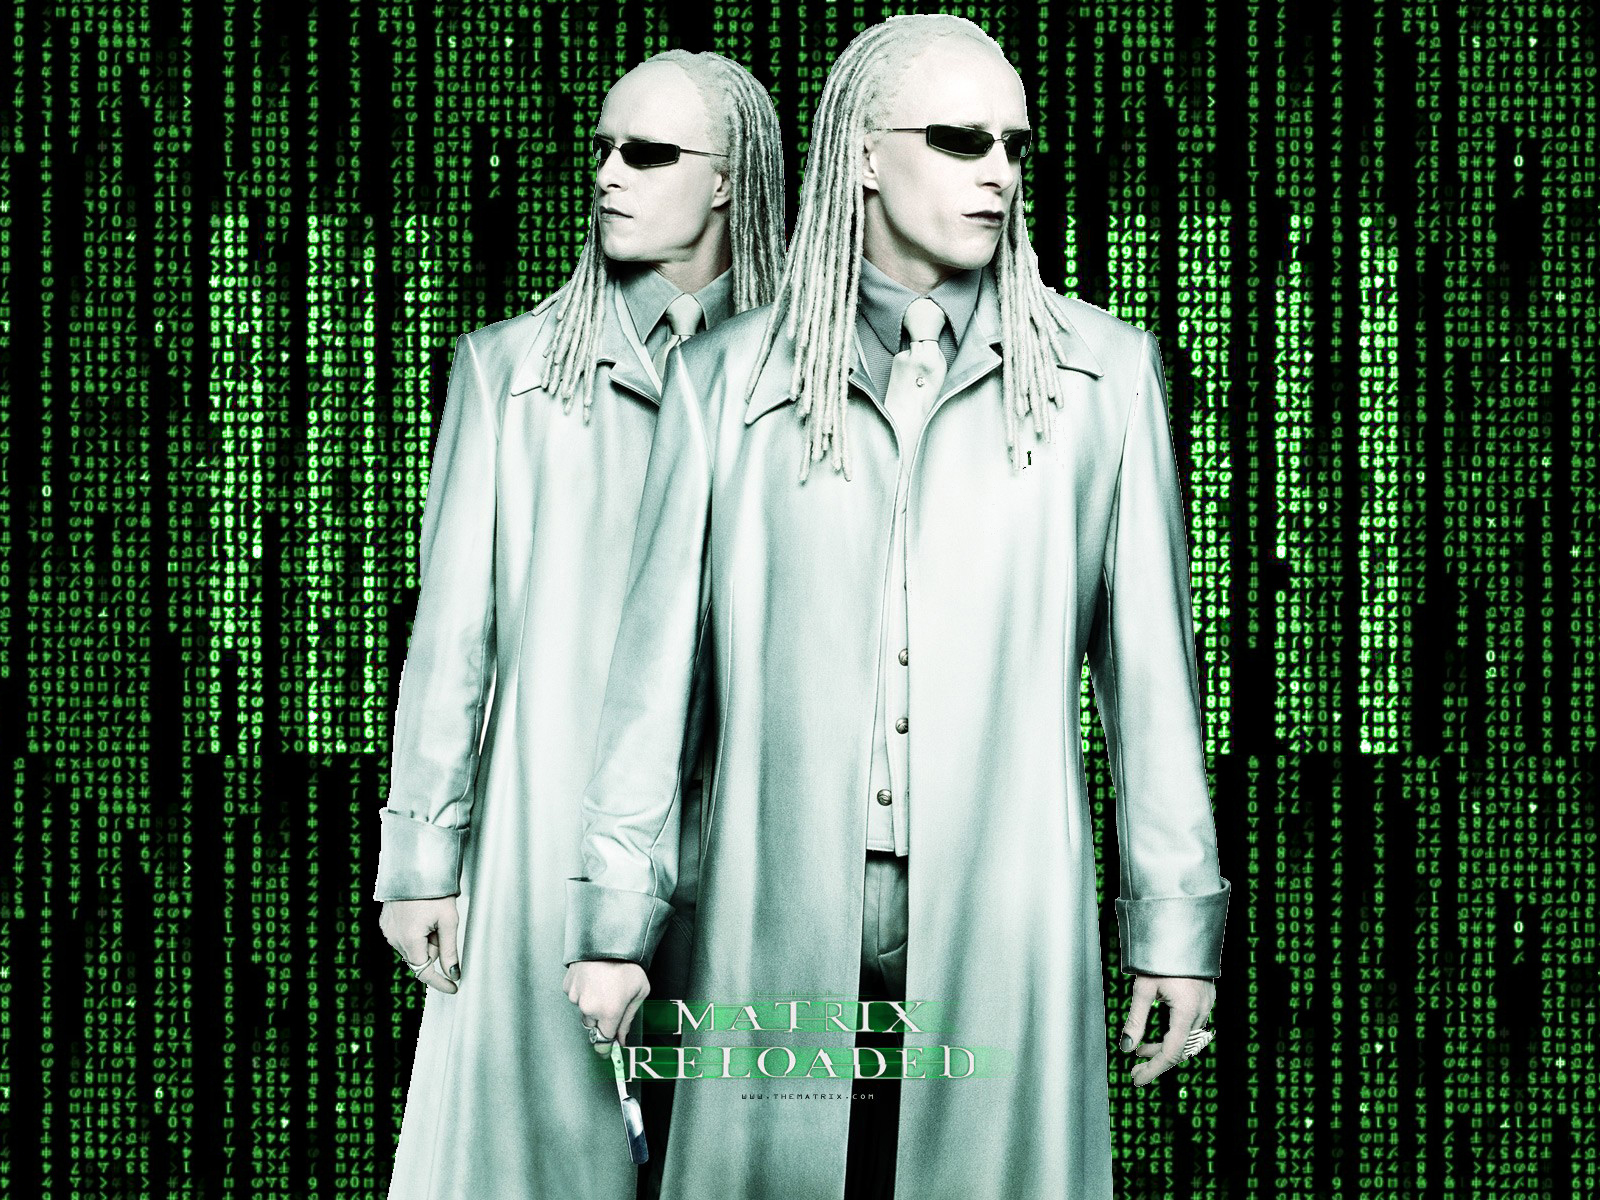 Matrix (Film)